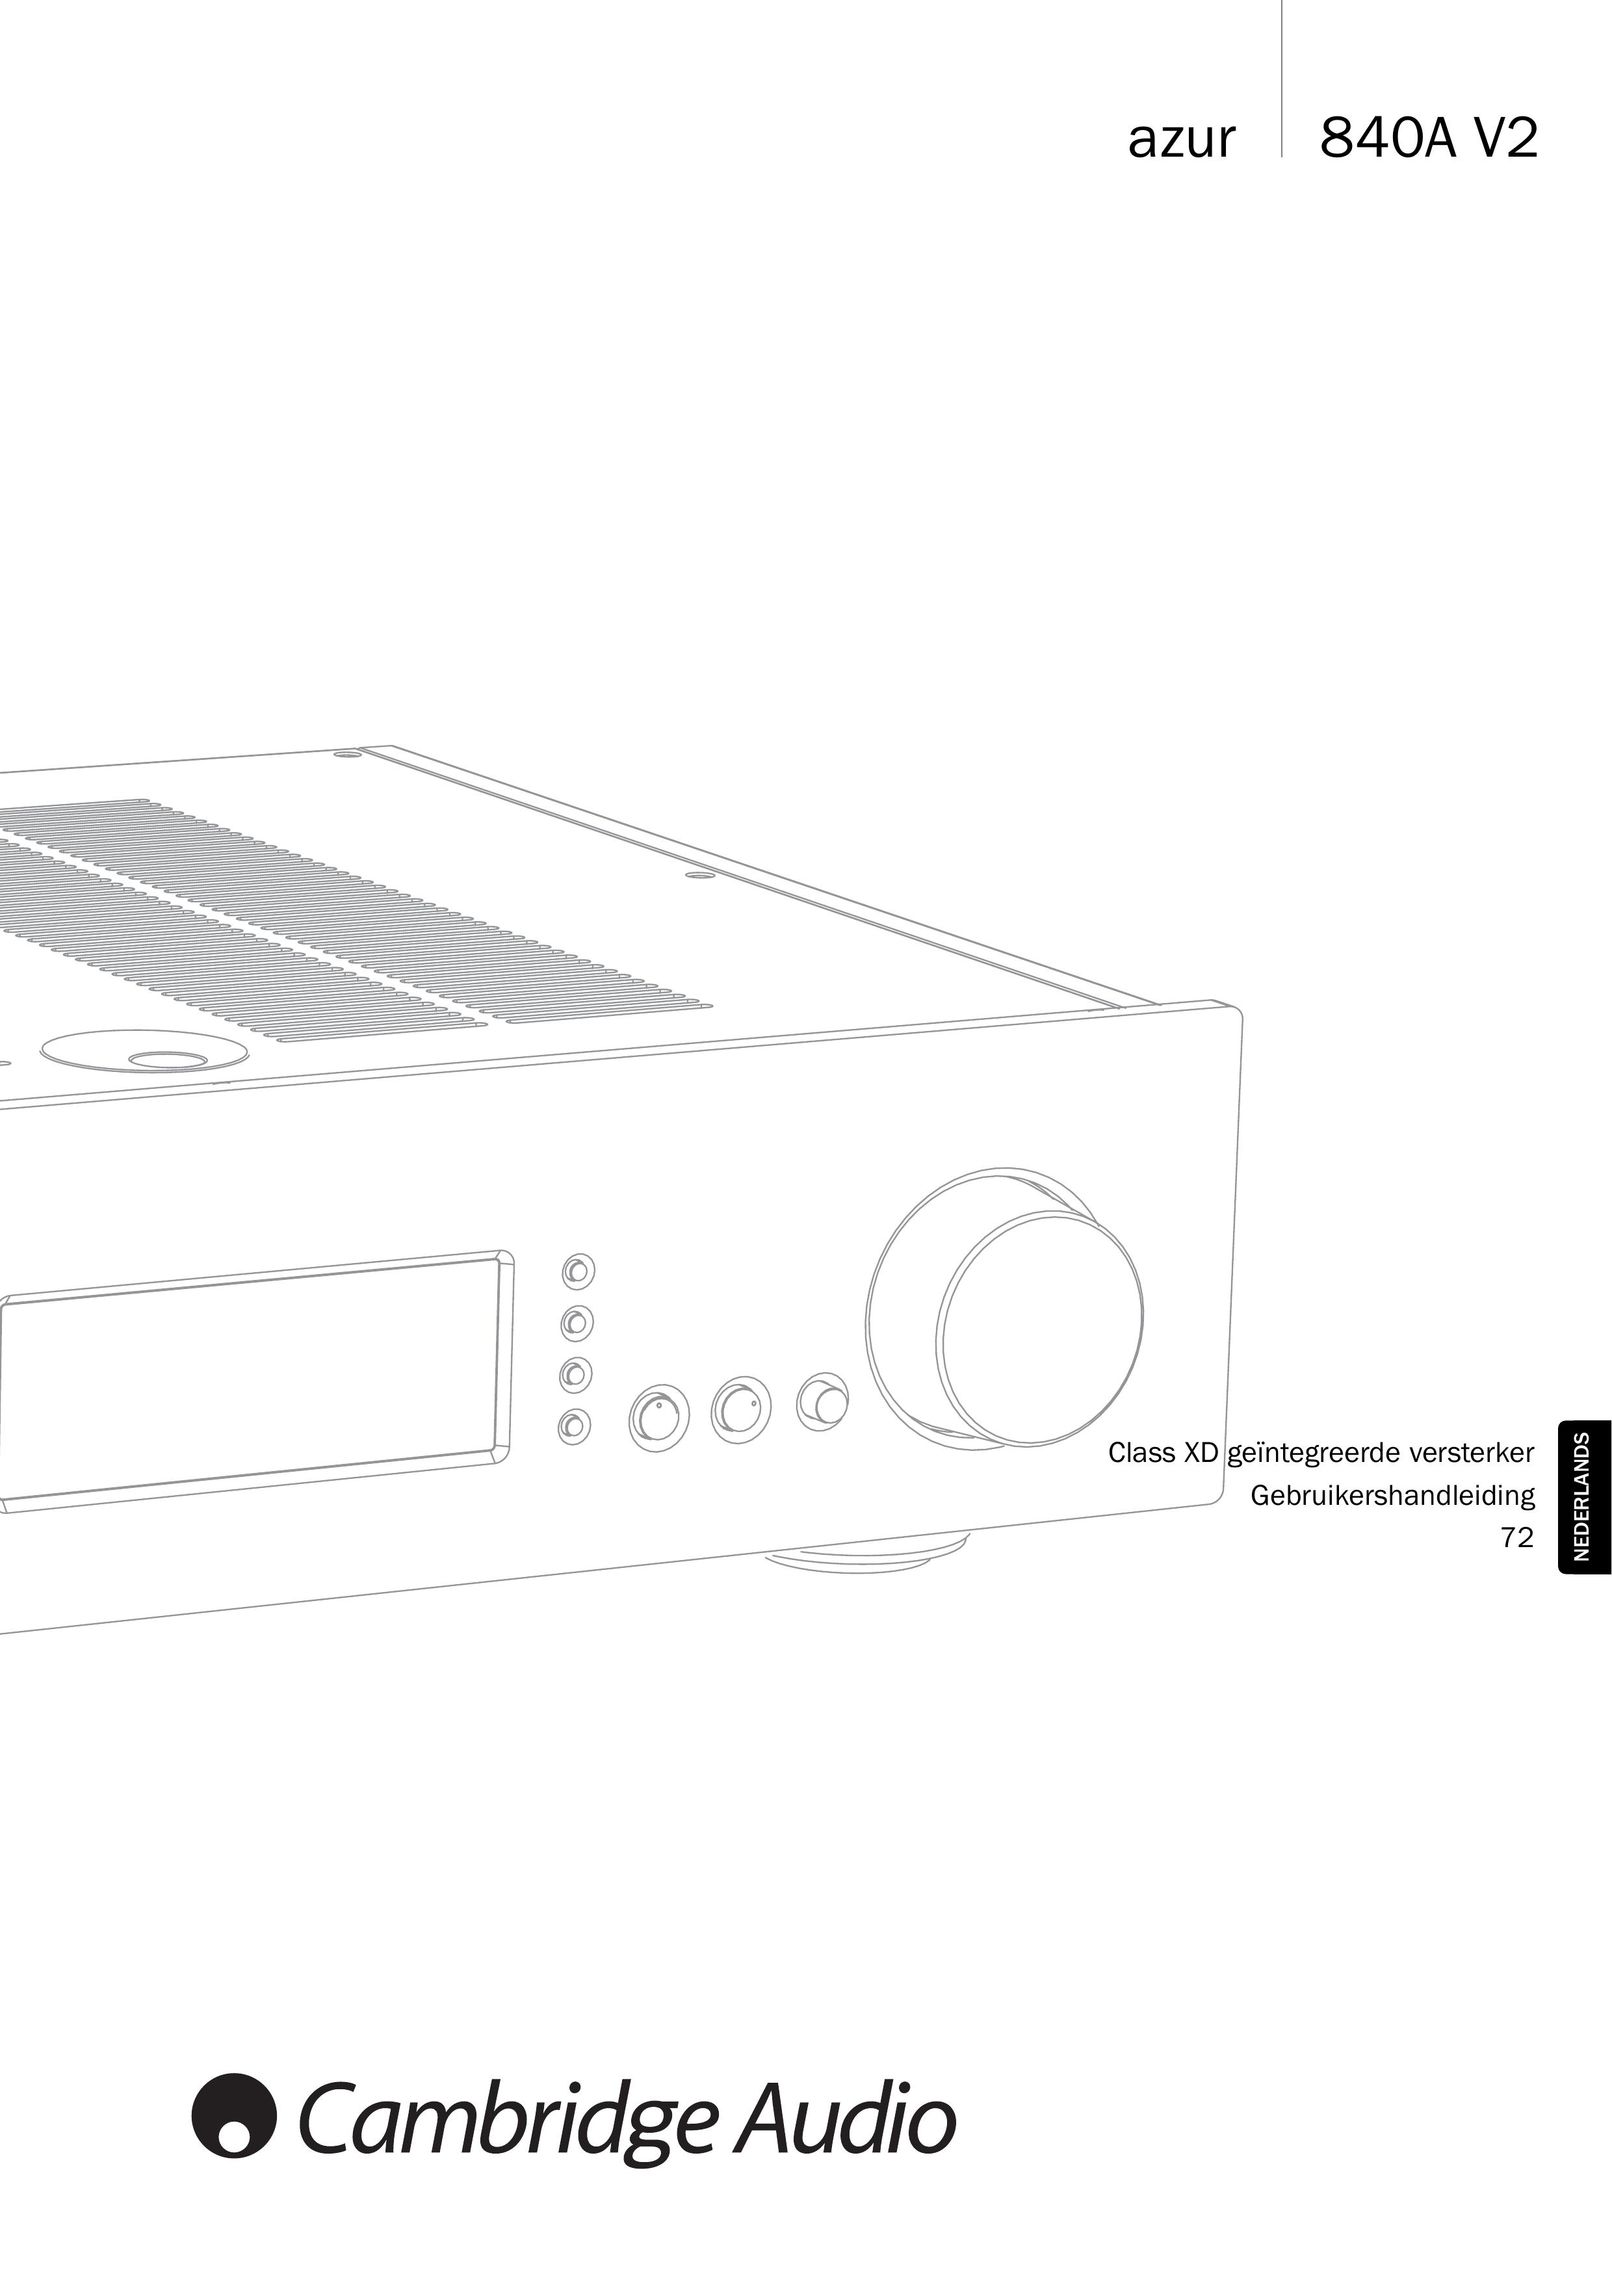 Cambridge Audio 840A V2 Stereo Receiver User Manual